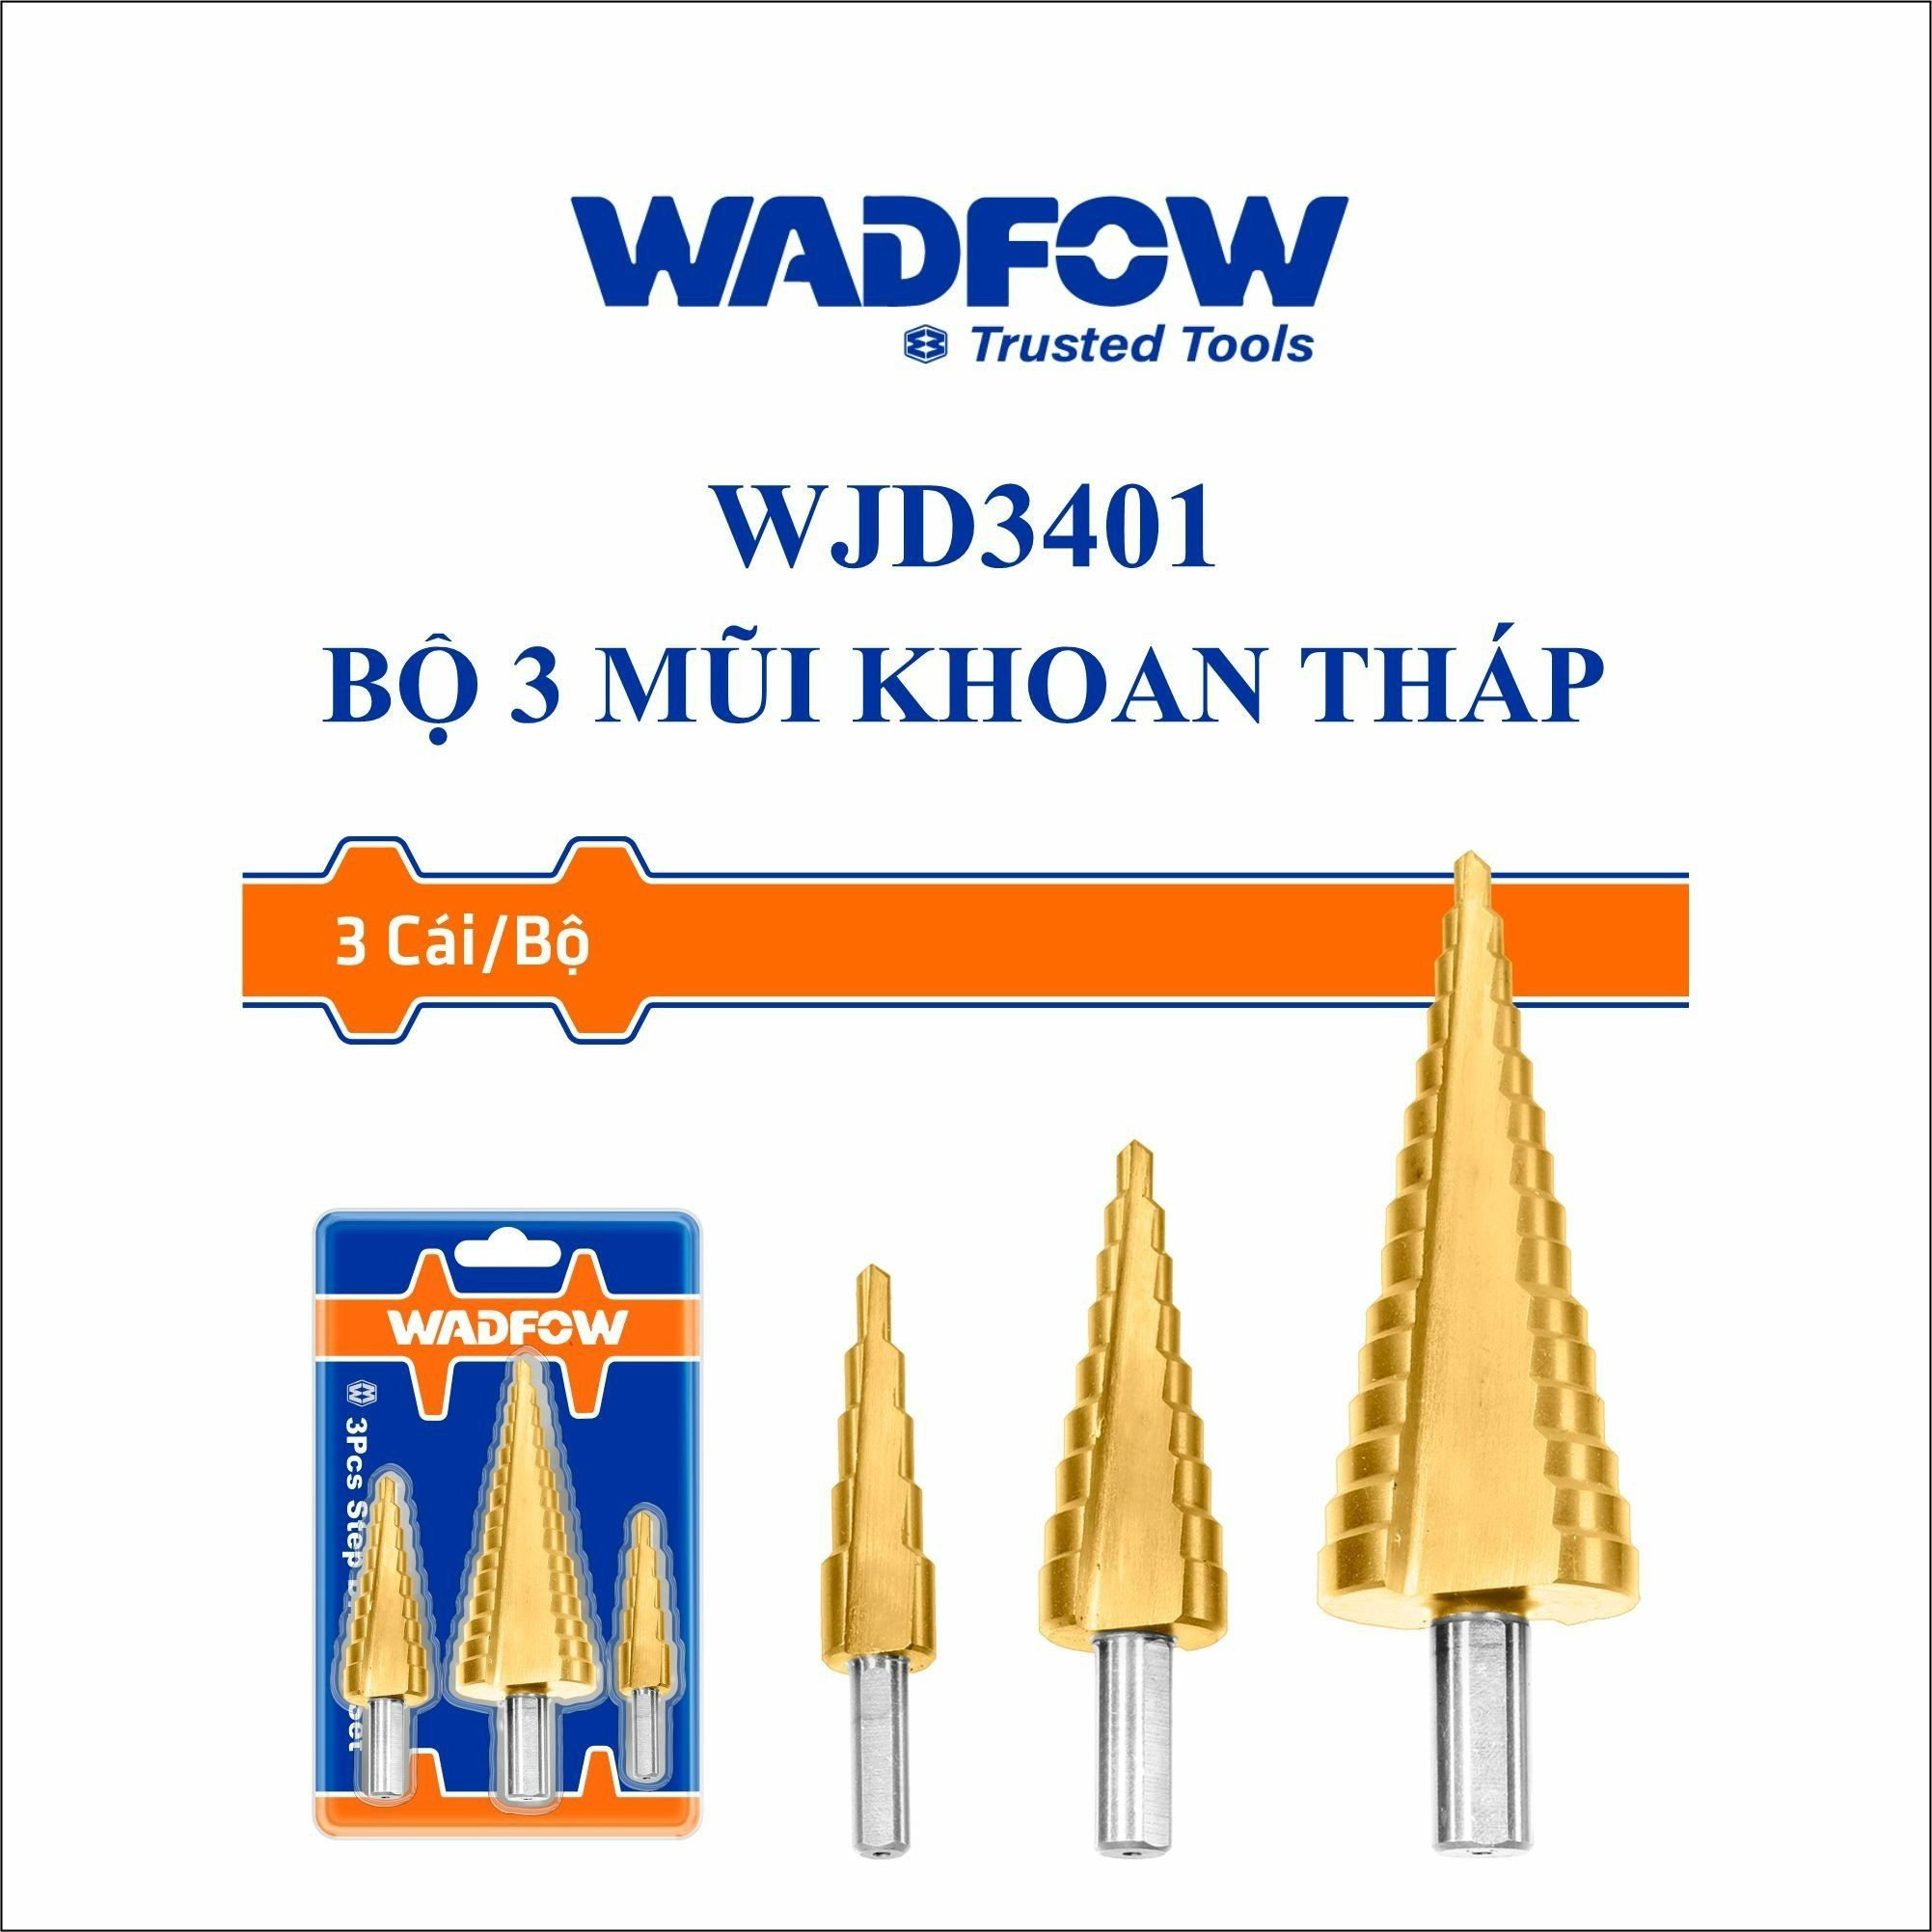  Bộ 3 mũi khoan tháp WADFOW WJD3401 